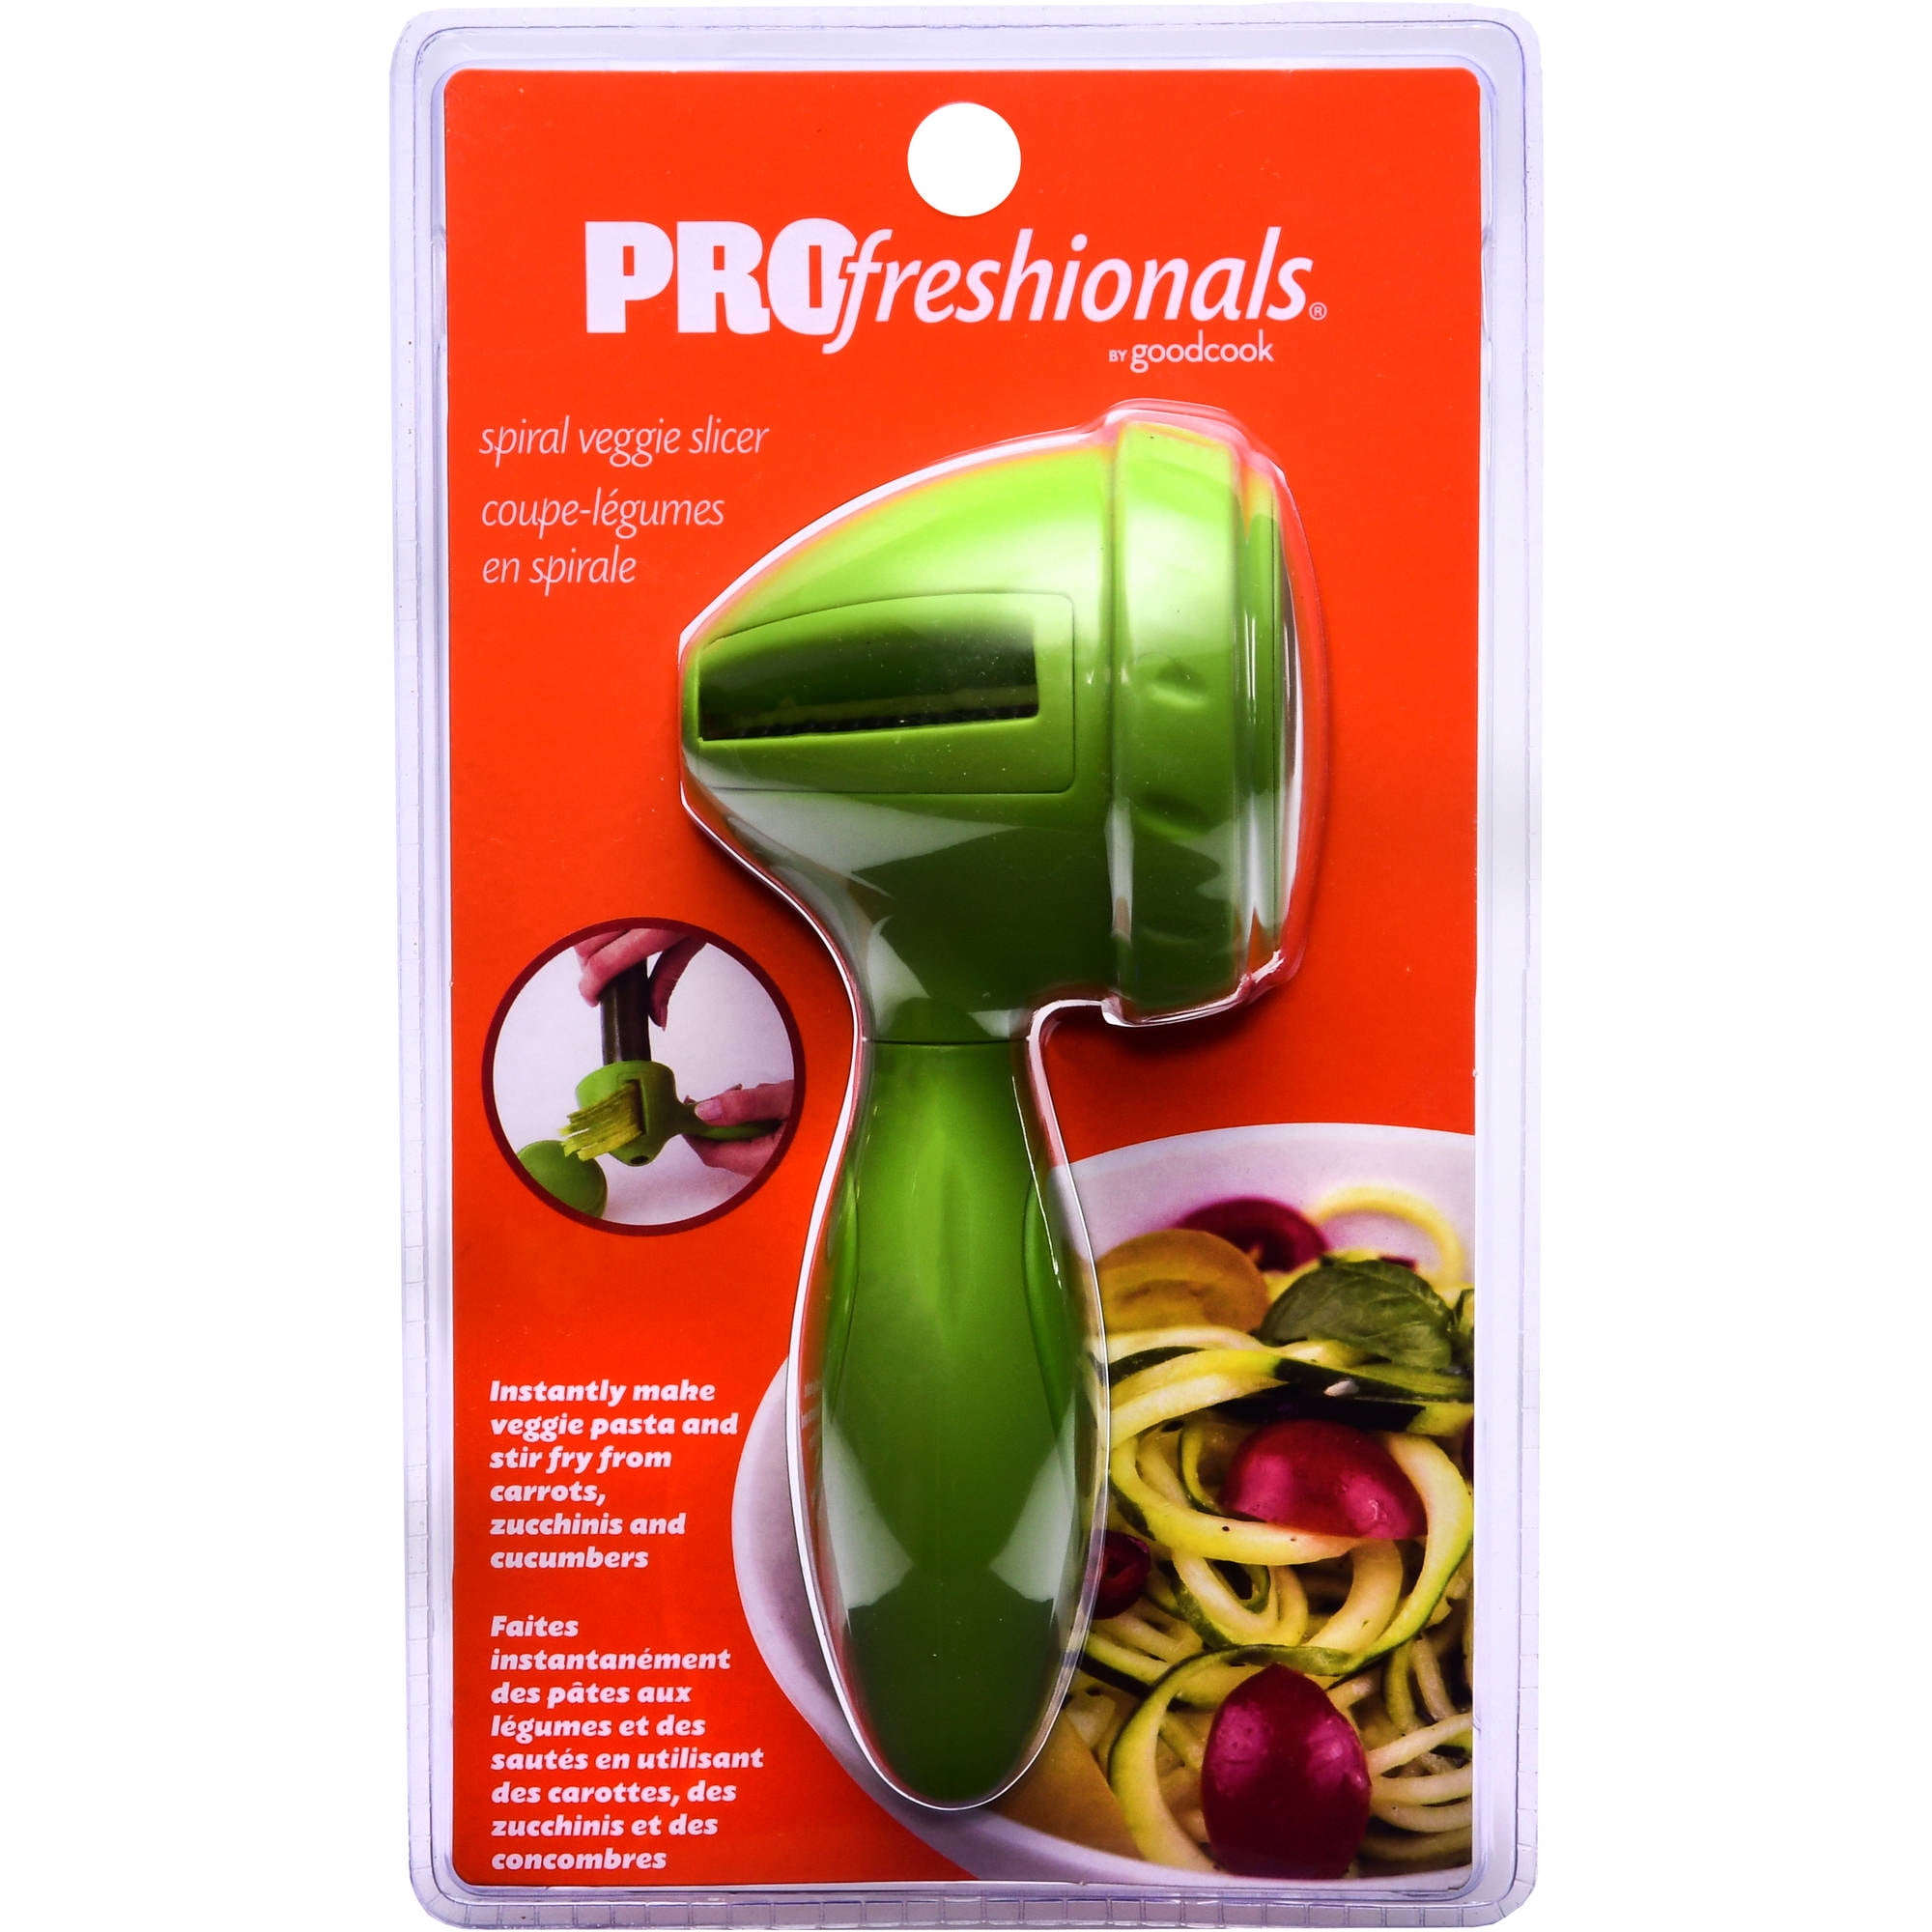 Portable screw machine vegetable slicer handheld screw machine peeler –  Peachy Perfect Food Collection